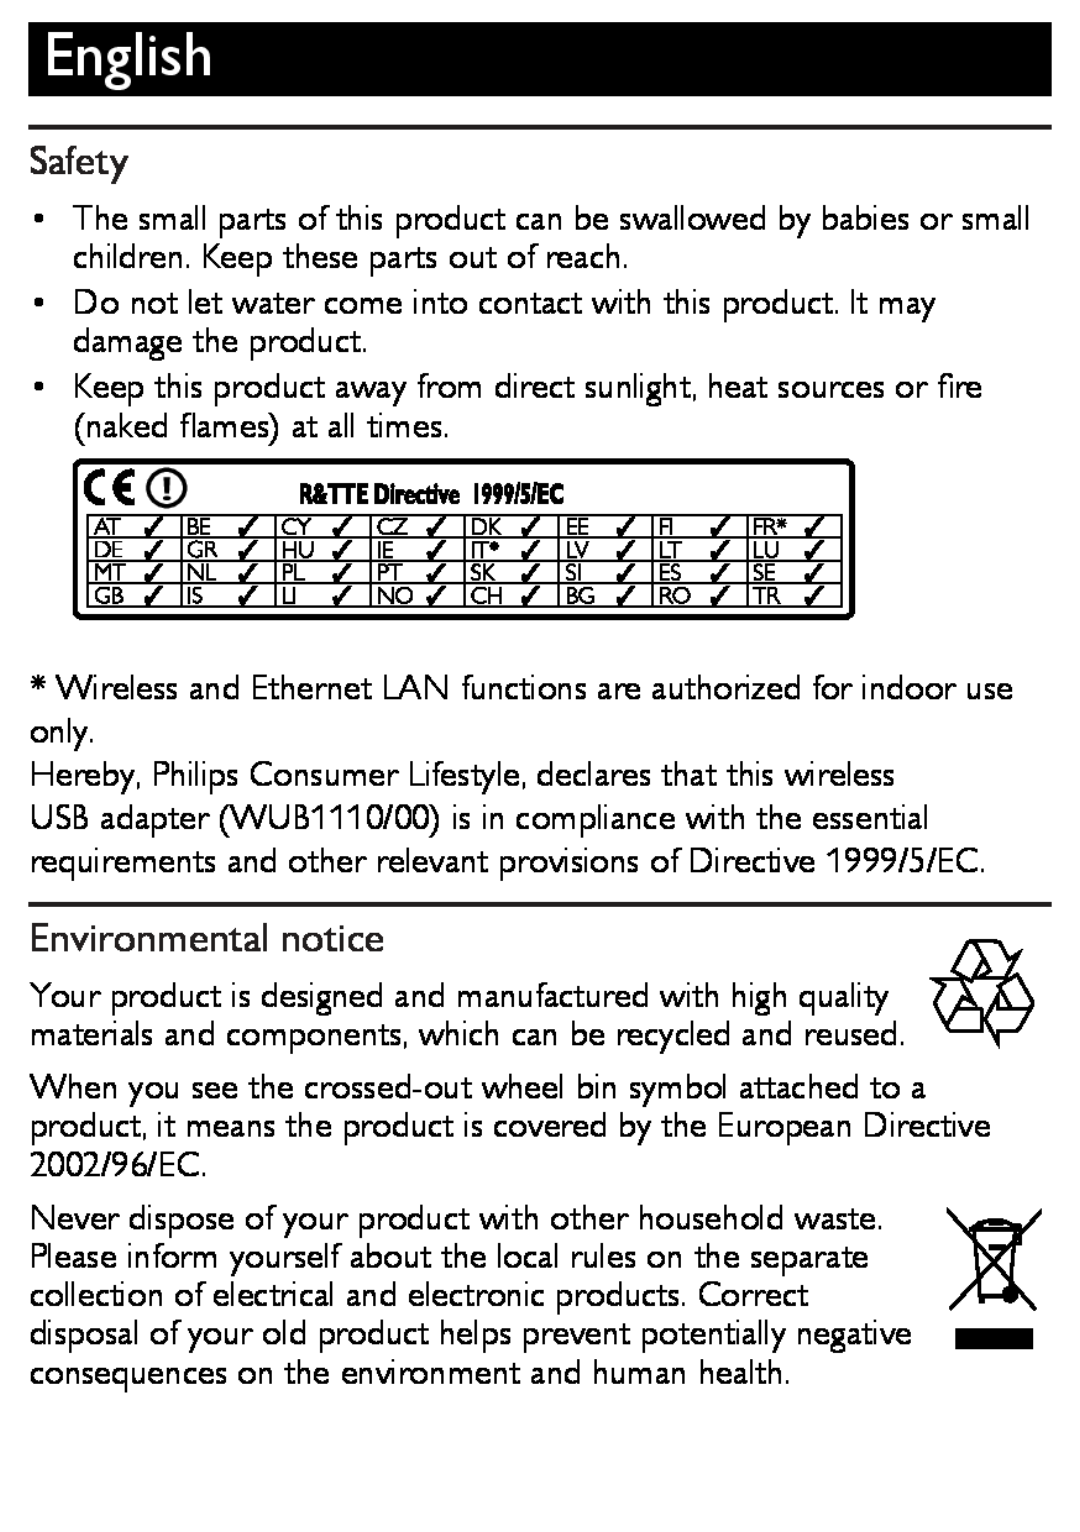 Philips WUB1110/00 user manual Safety, Environmental notice, English 